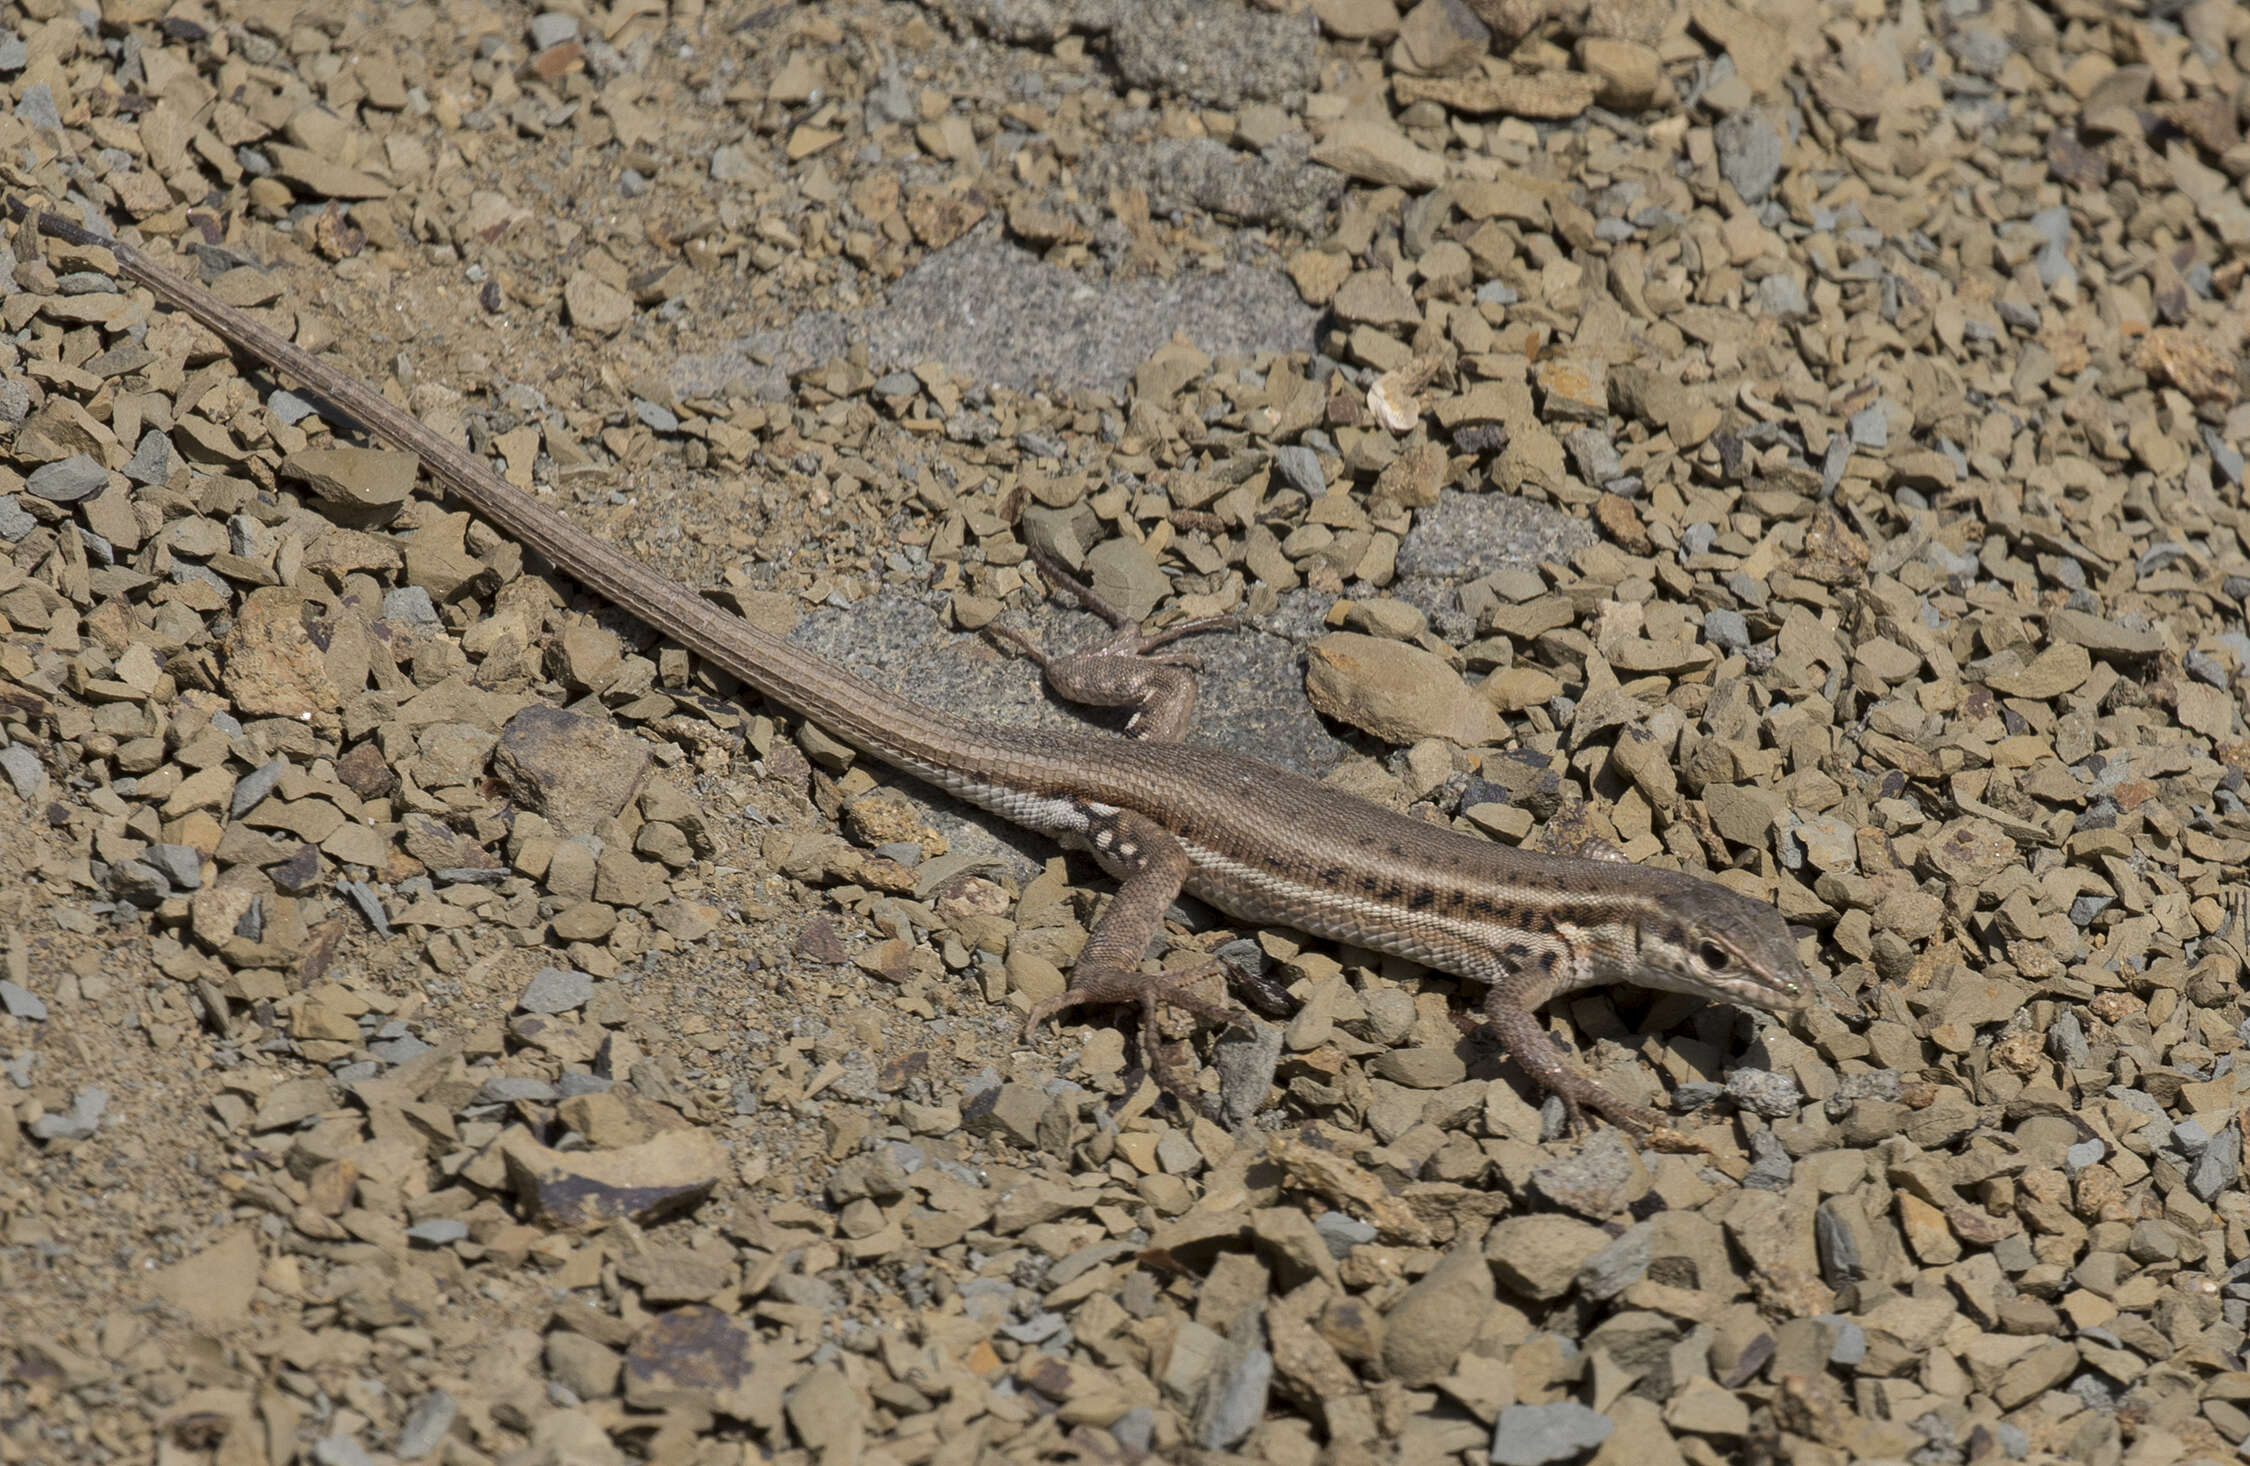 Image of Snake-eyed lizard